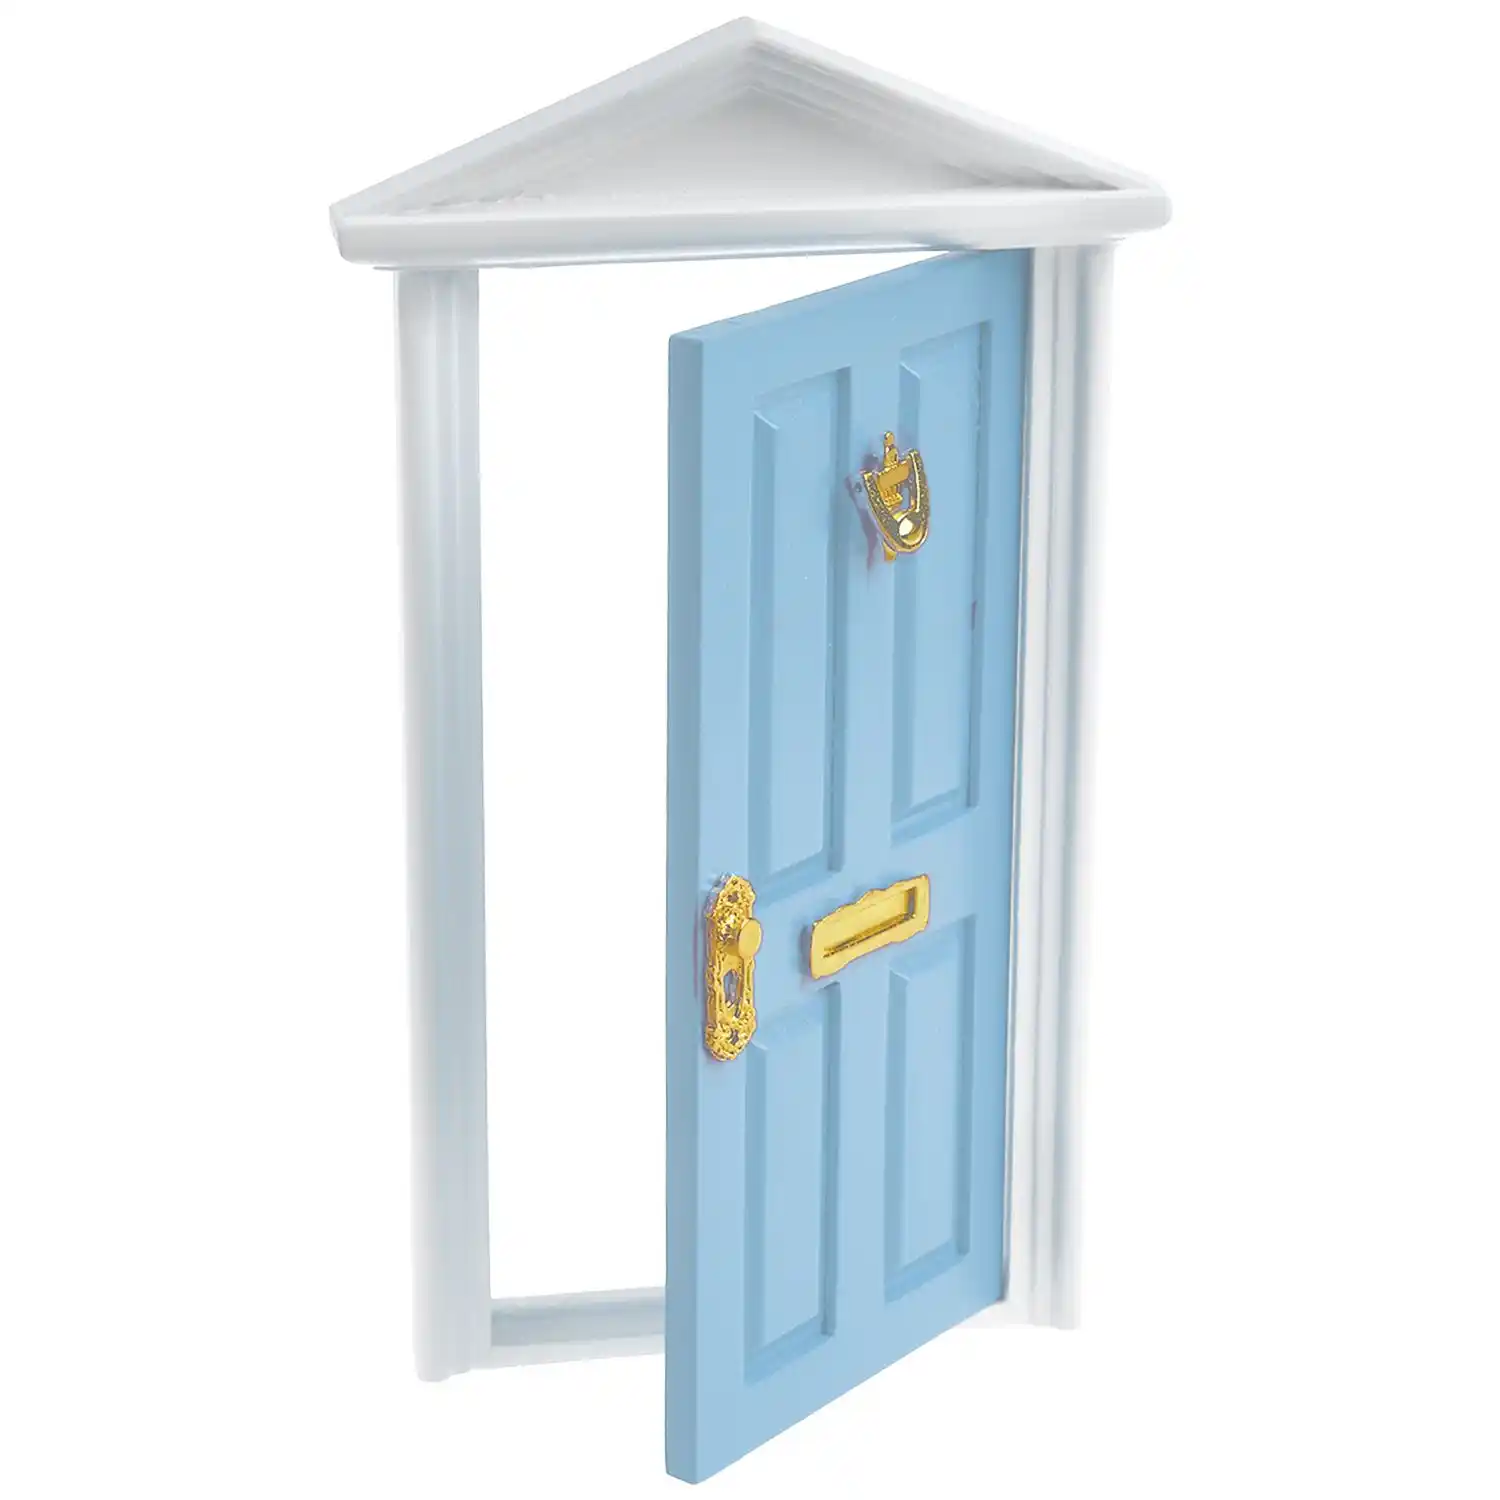 1:12 scale wooden fairy steepletop door dollhouse